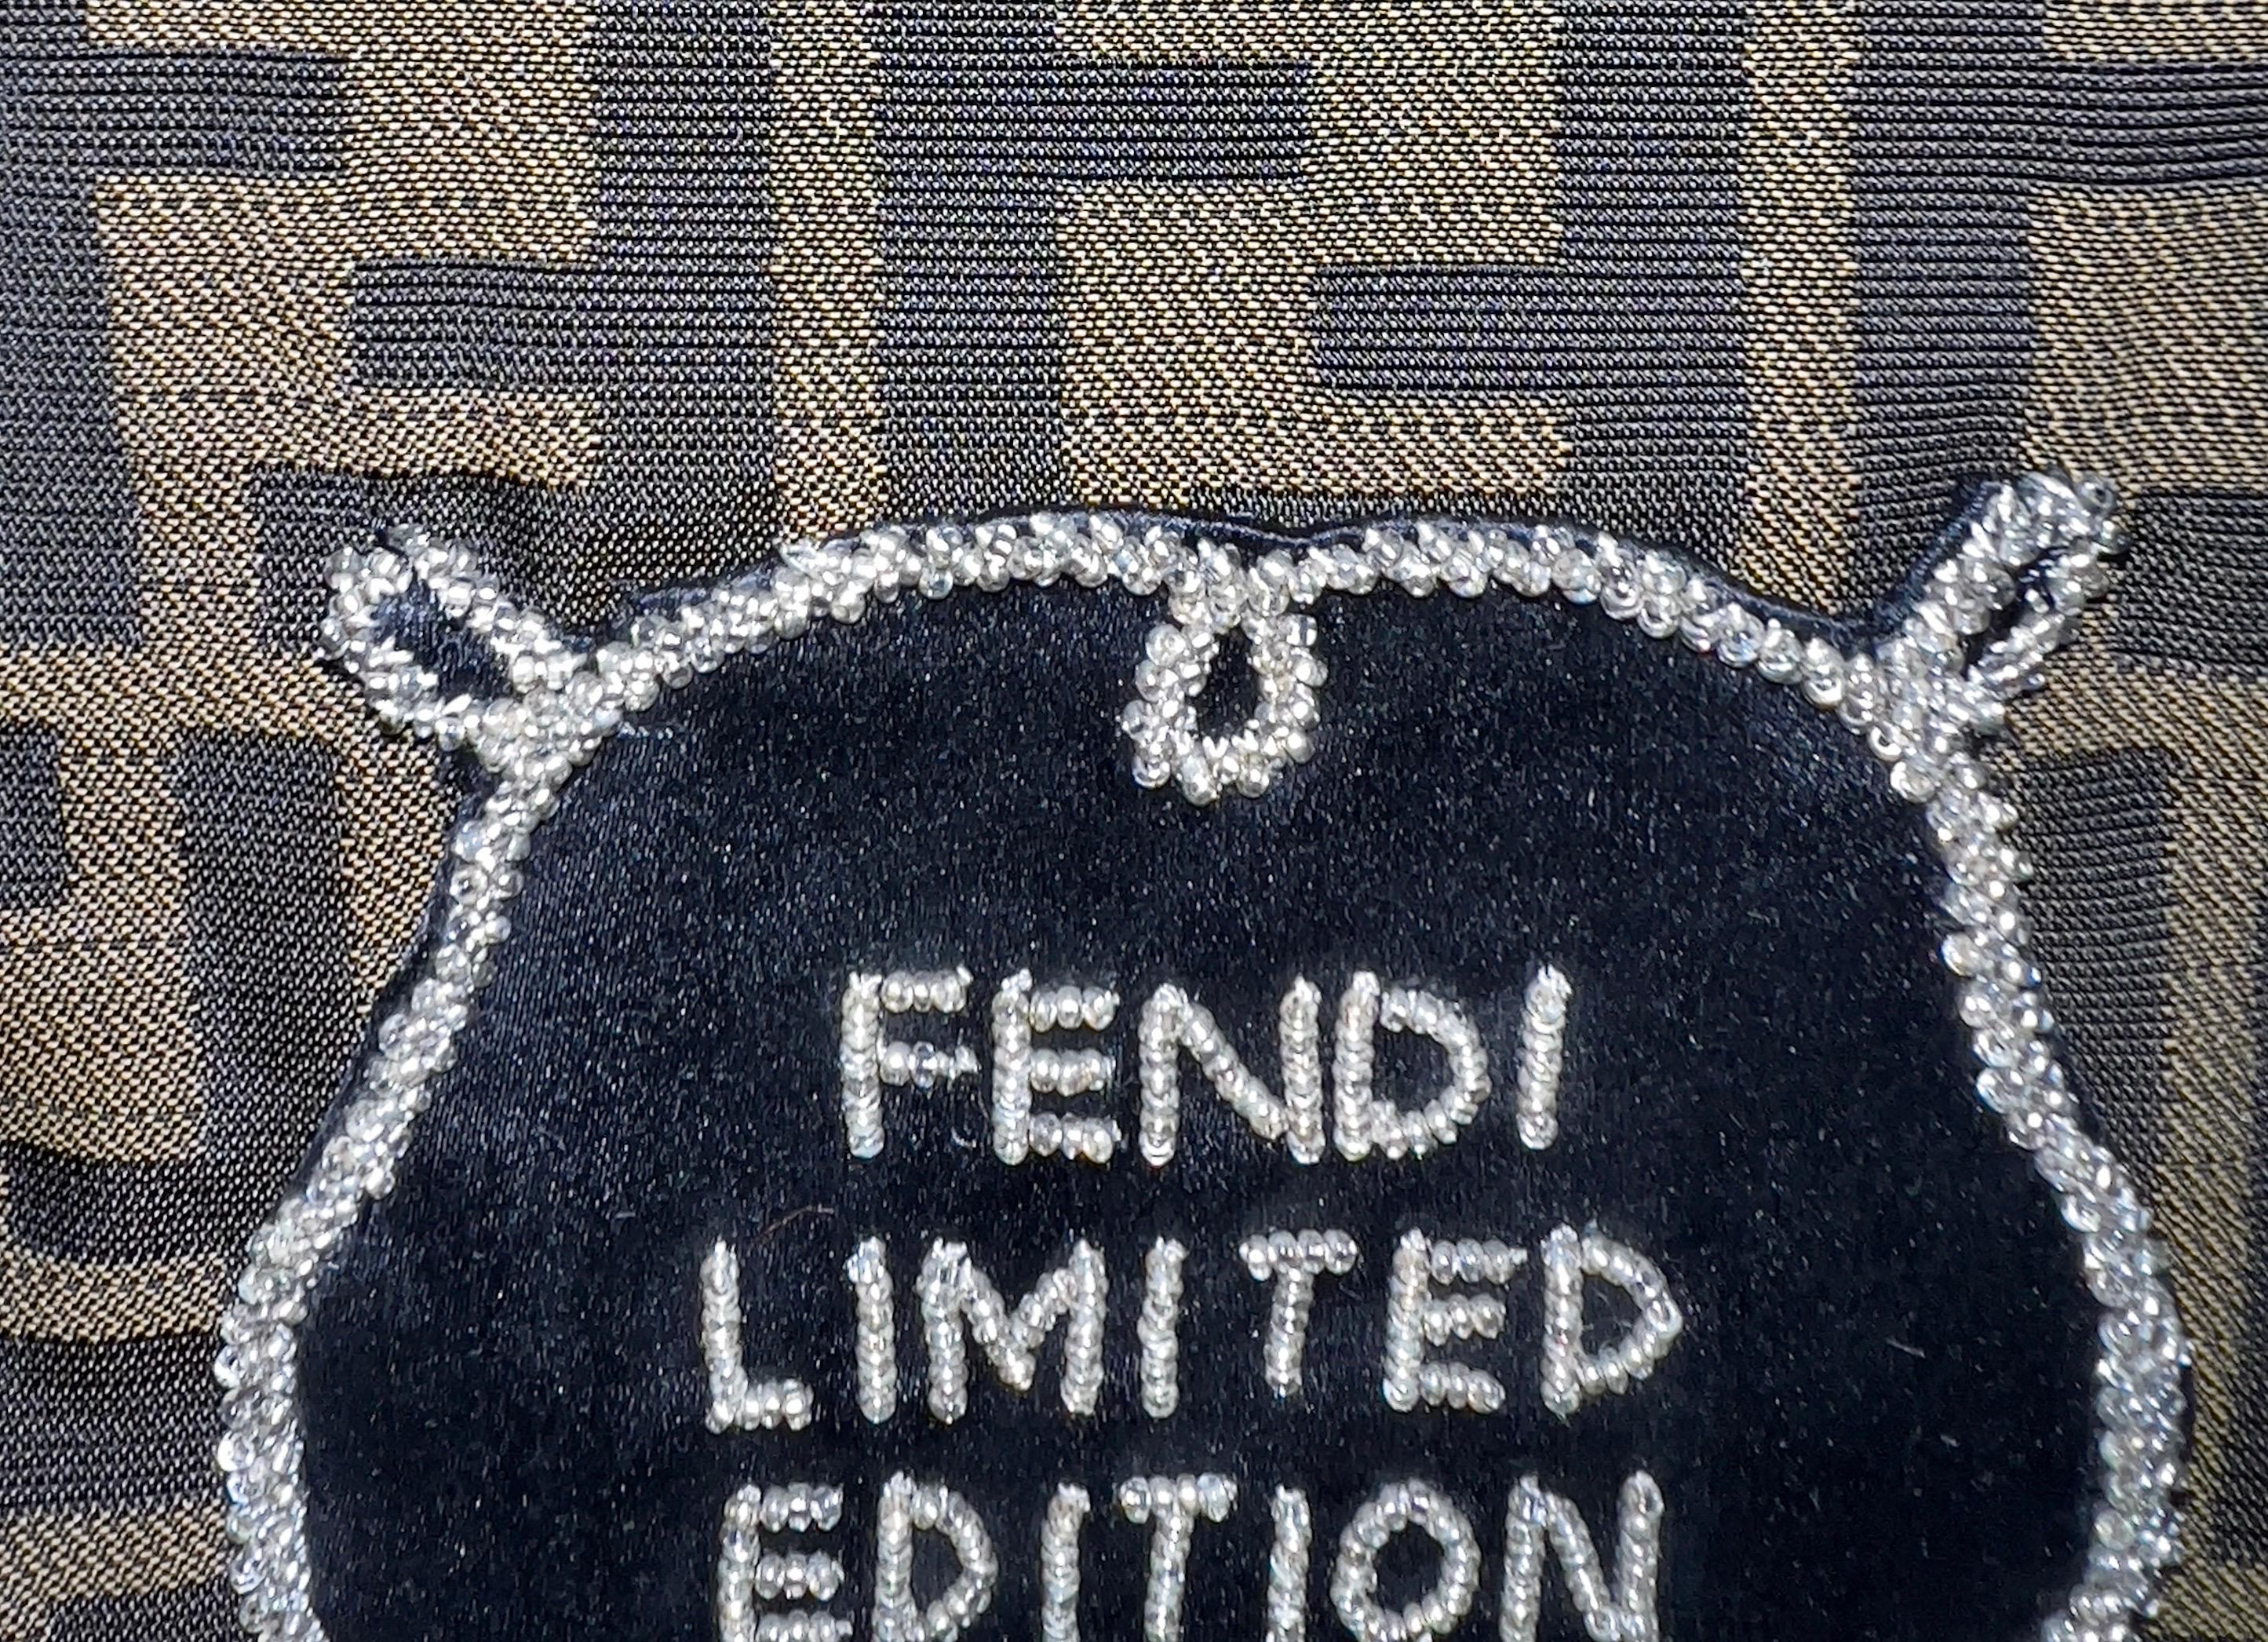 UNWORN Fendi Spy Bag Floral Hand-Embroidery Hand-Painted Black Crystals 2005 5